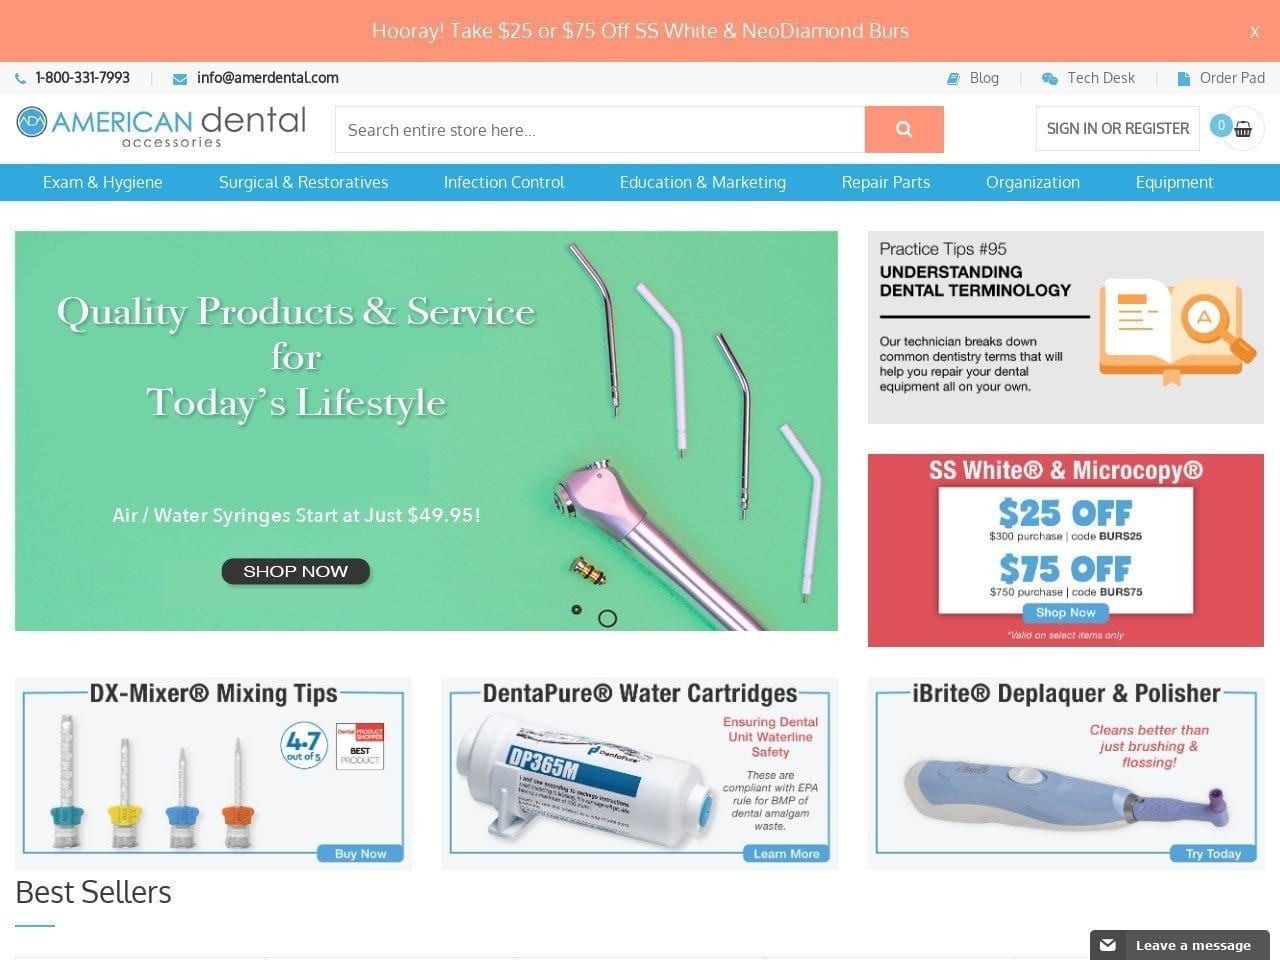 American Dental Accessories Inc. Website Screenshot from amerdental.com